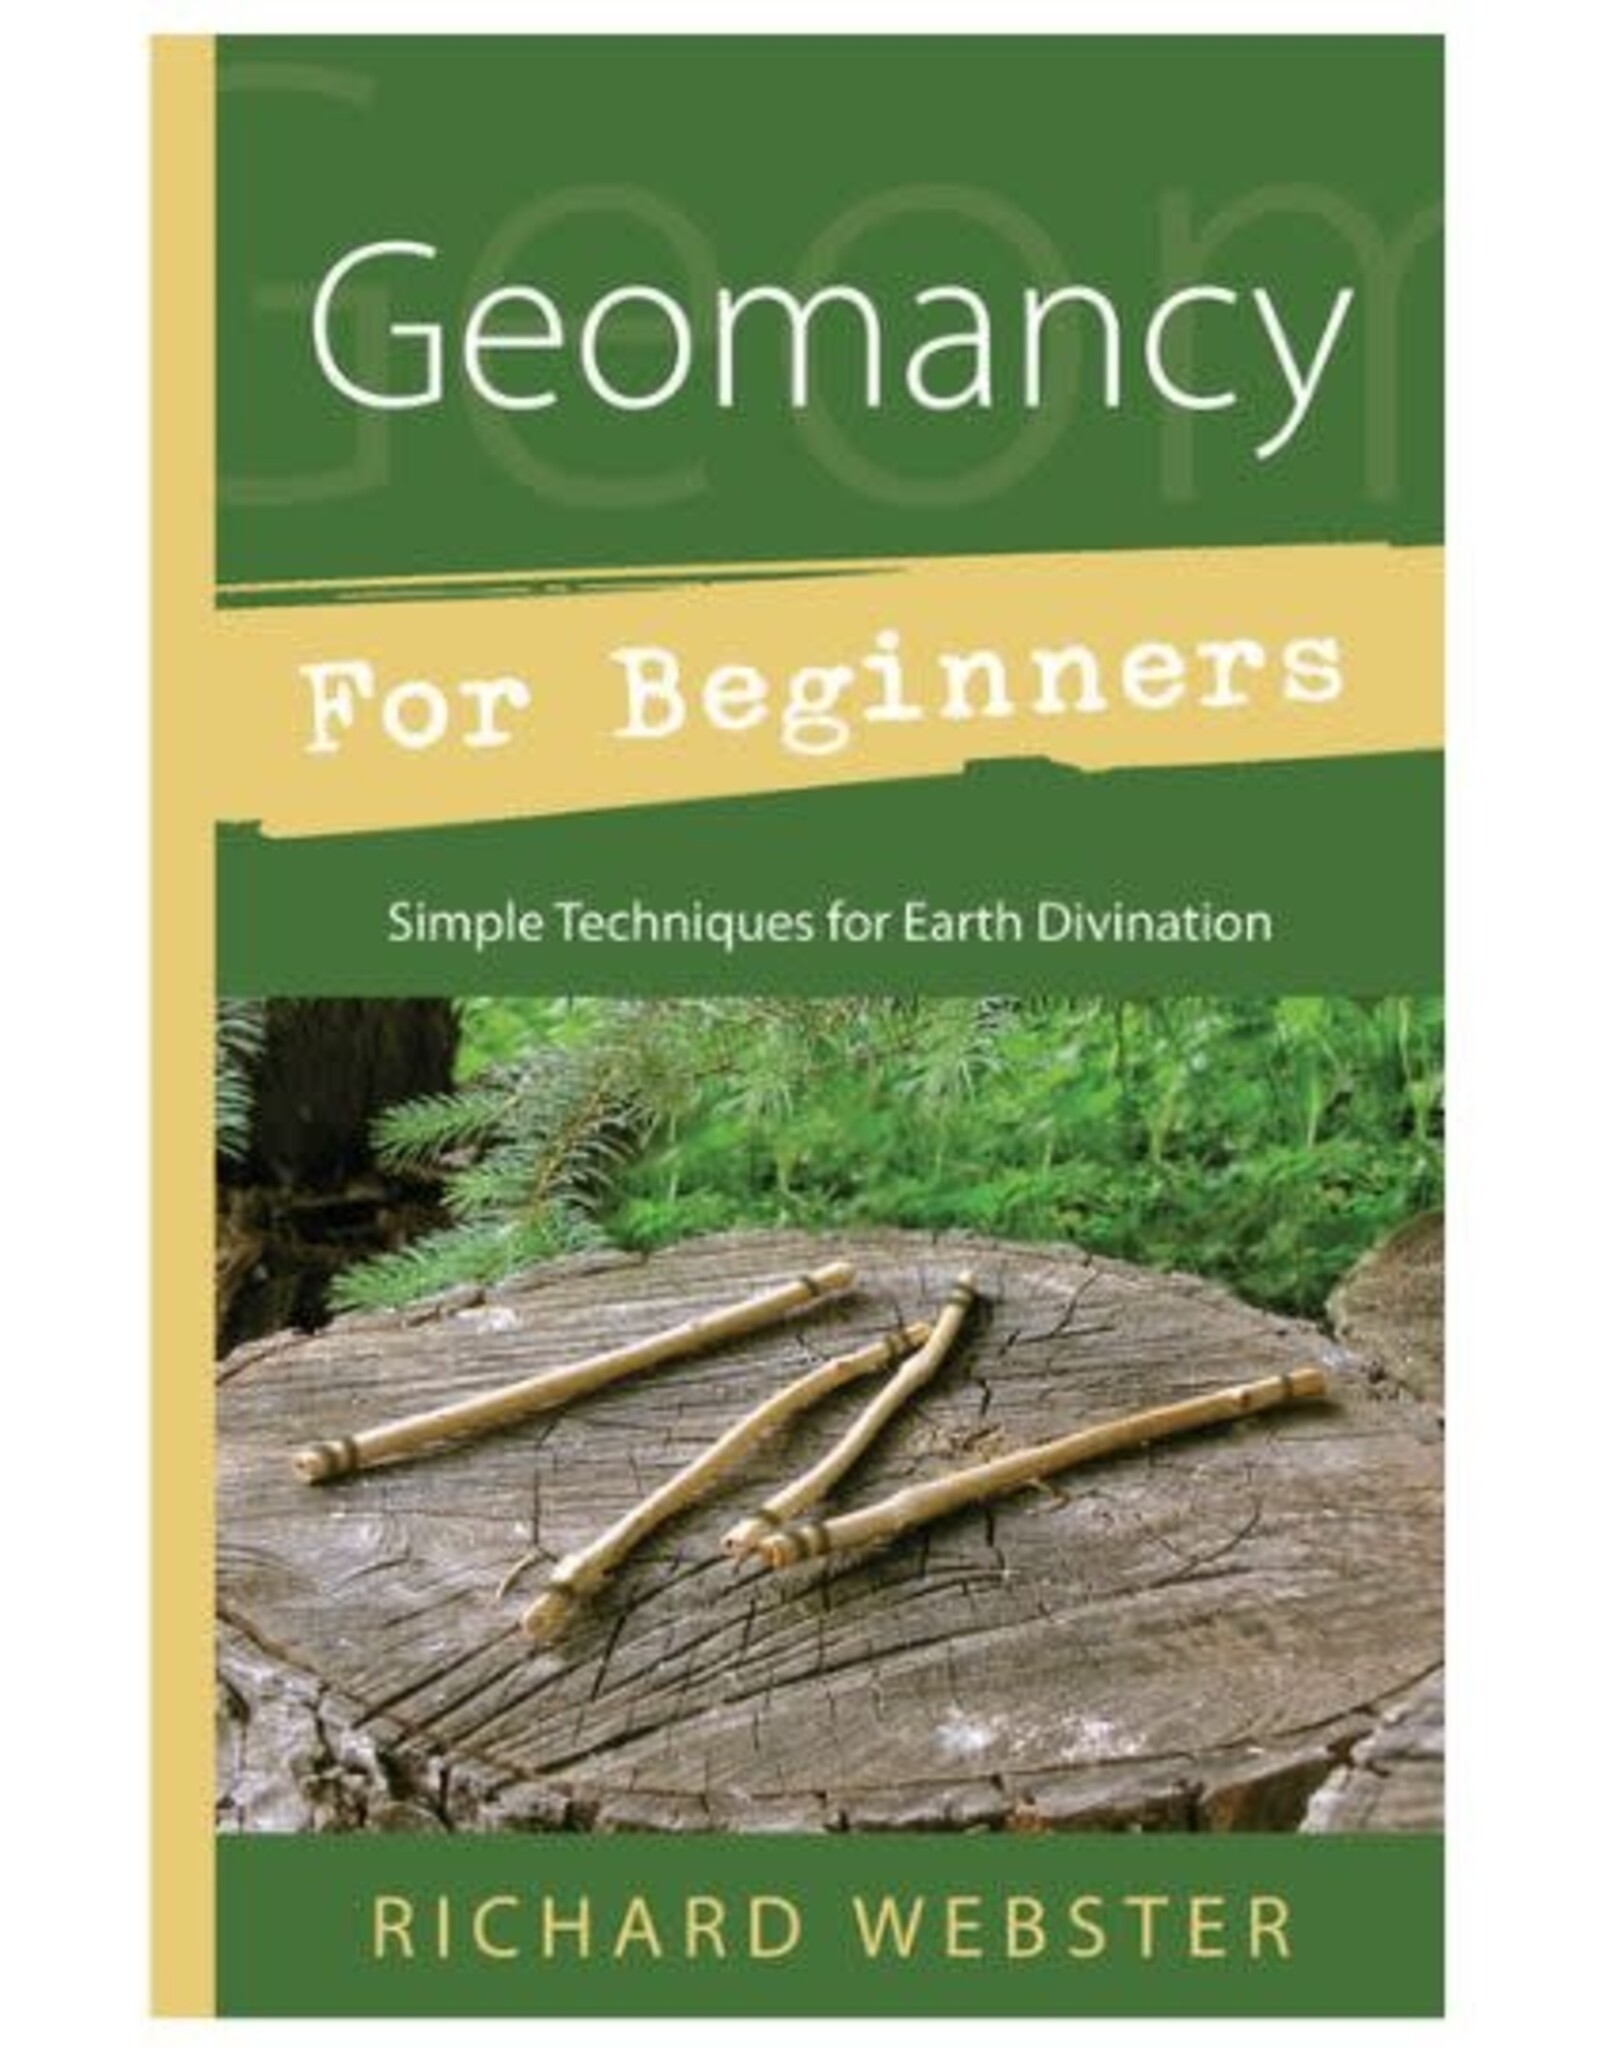 Richard Webster Geomancy for Beginners by Richard Webster